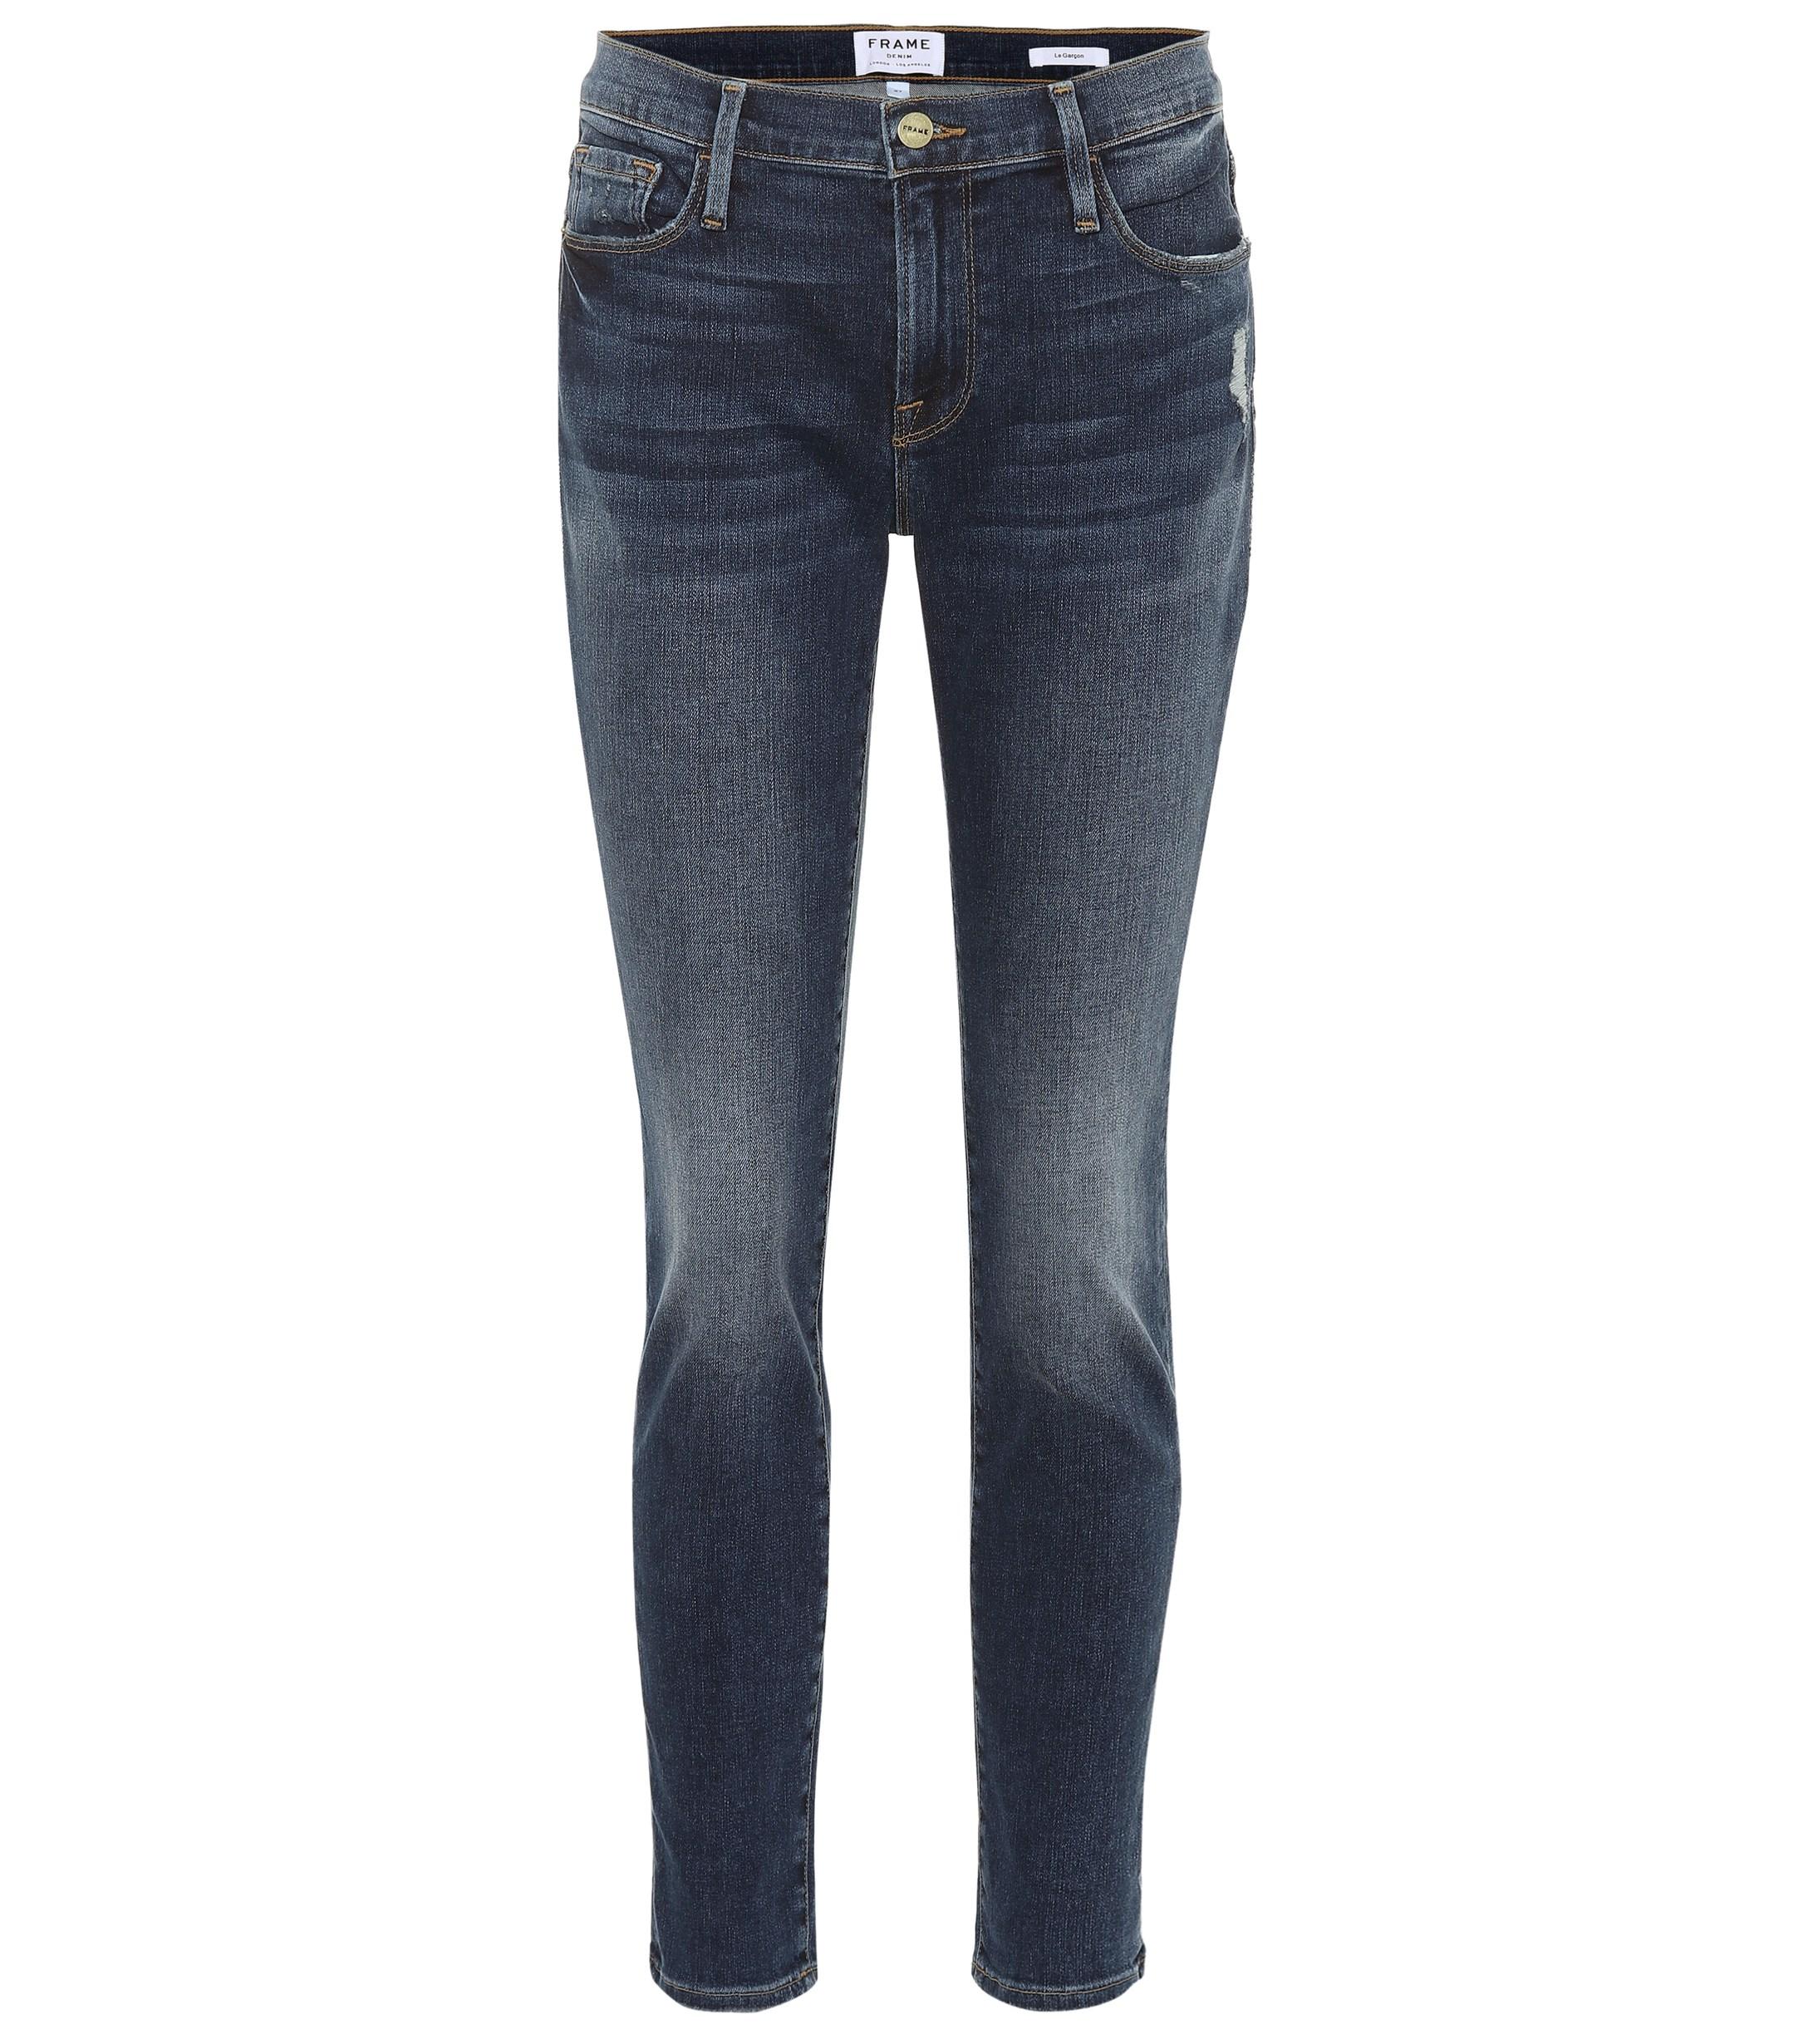 Lyst - FRAME Le Garçon Cropped Mid-rise Jeans in Blue